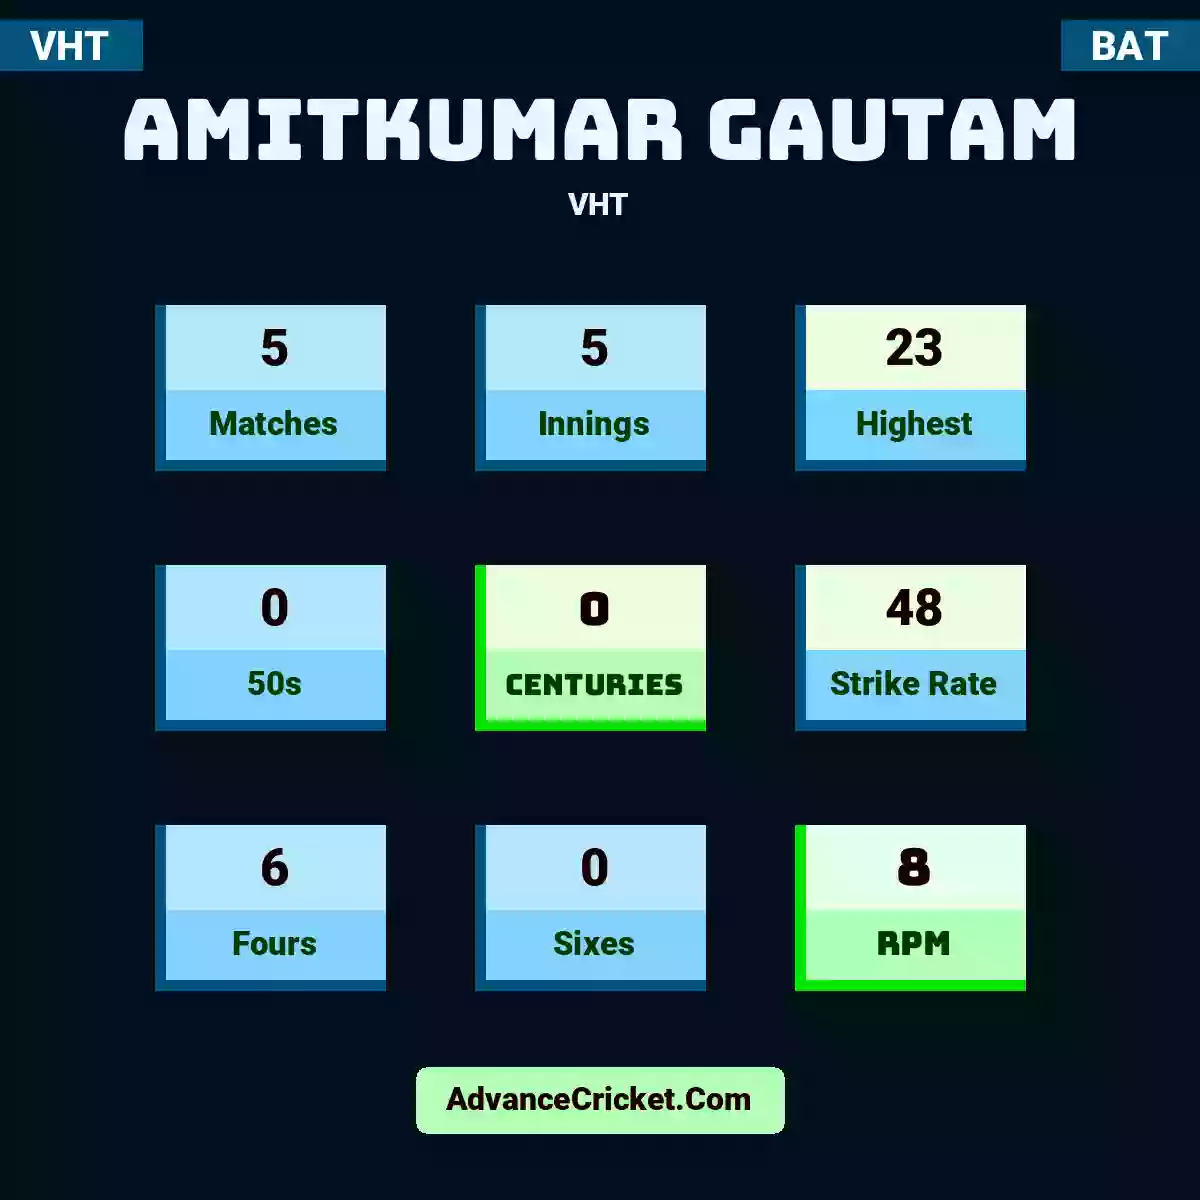 Amitkumar Gautam VHT , Amitkumar Gautam played 5 matches, scored 23 runs as highest, 0 half-centuries, and 0 centuries, with a strike rate of 48. A.Gautam hit 6 fours and 0 sixes, with an RPM of 8.